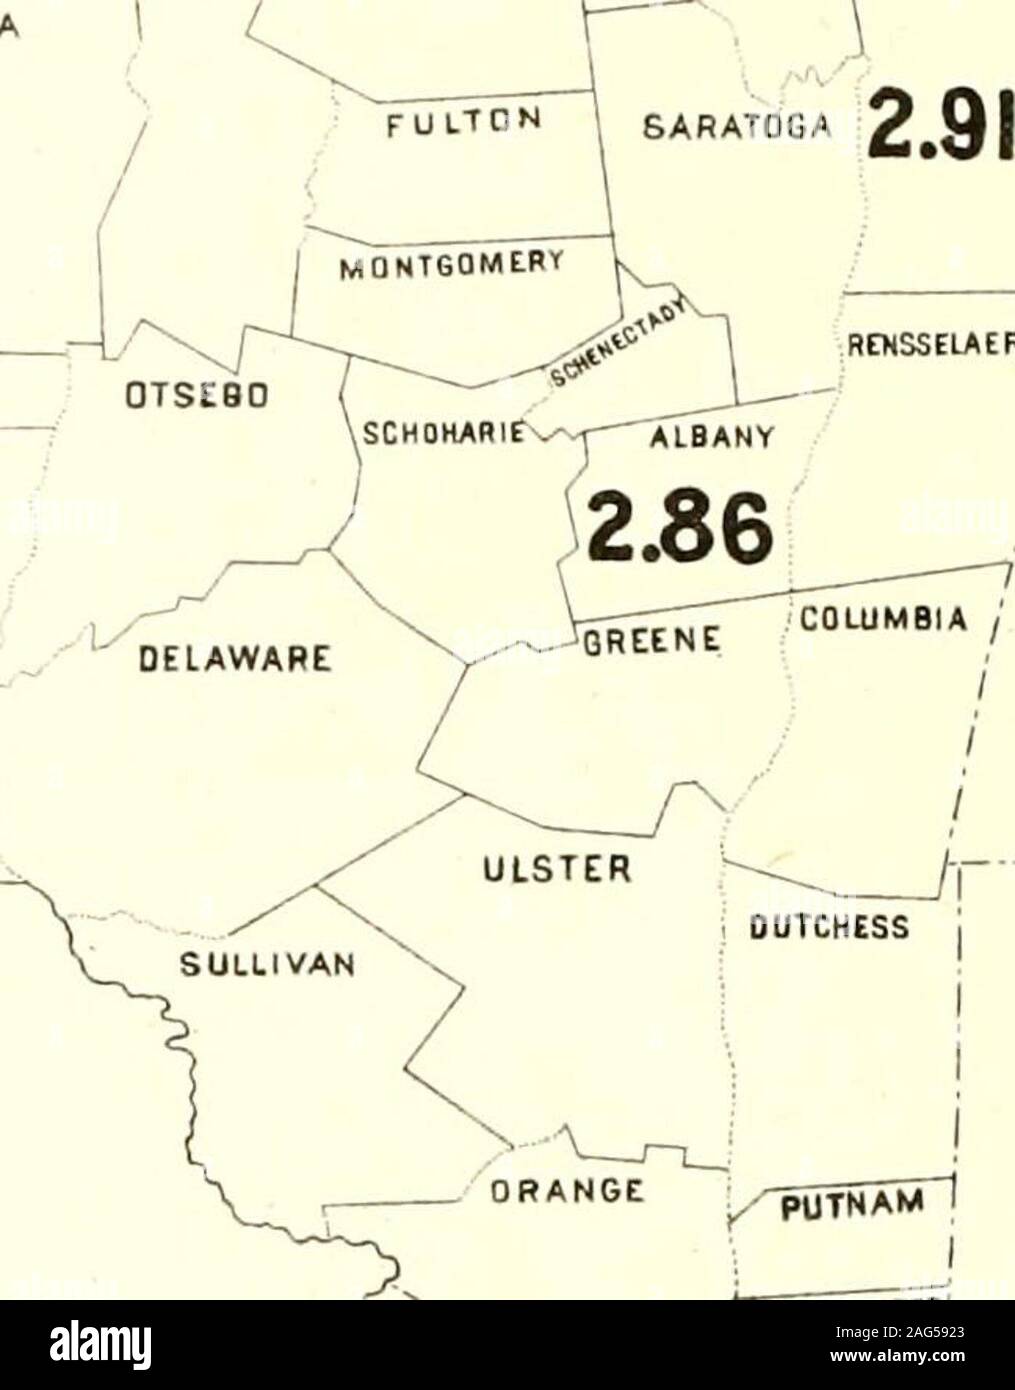 Census Of The State Of New York For 1875 Tioga I Map No I J I Iffiire V In Carji Fonfi I S Wif Ir Iaf Pe Centofits Jopuftitrorr Nf F E Crn Vu S O S S Fa Vhor I If